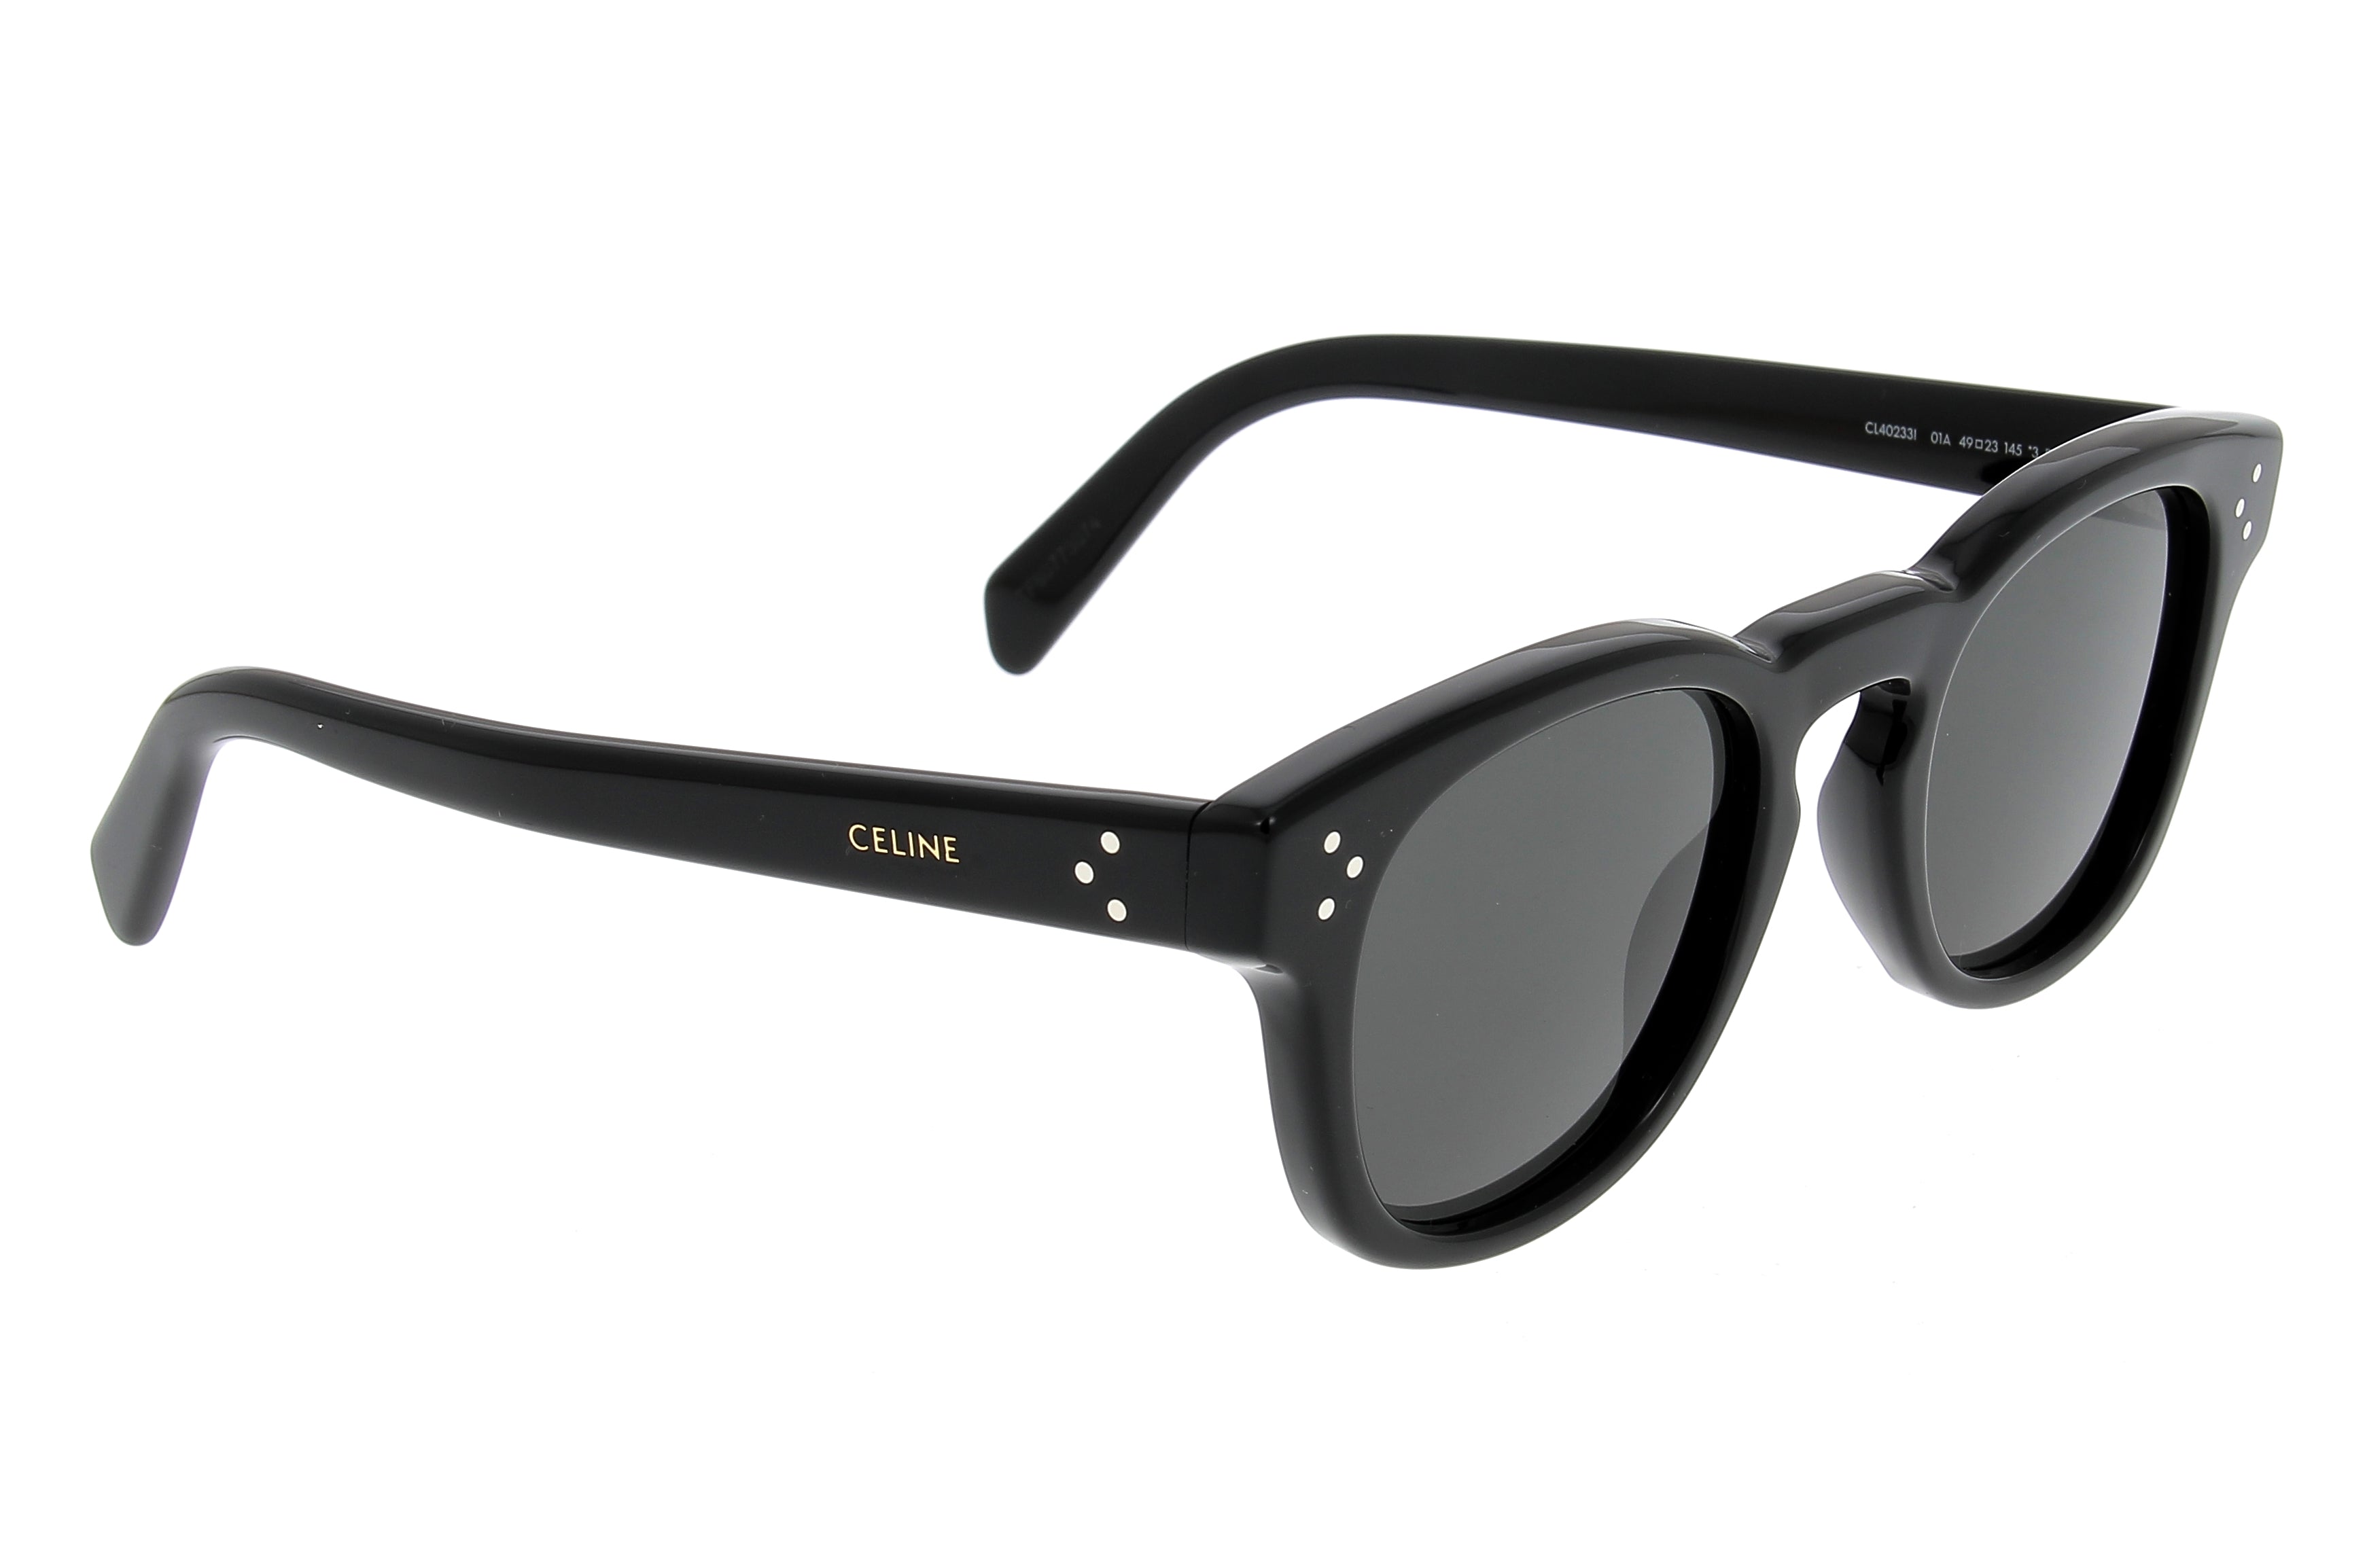 Celine CL40233I 01a sunglasses